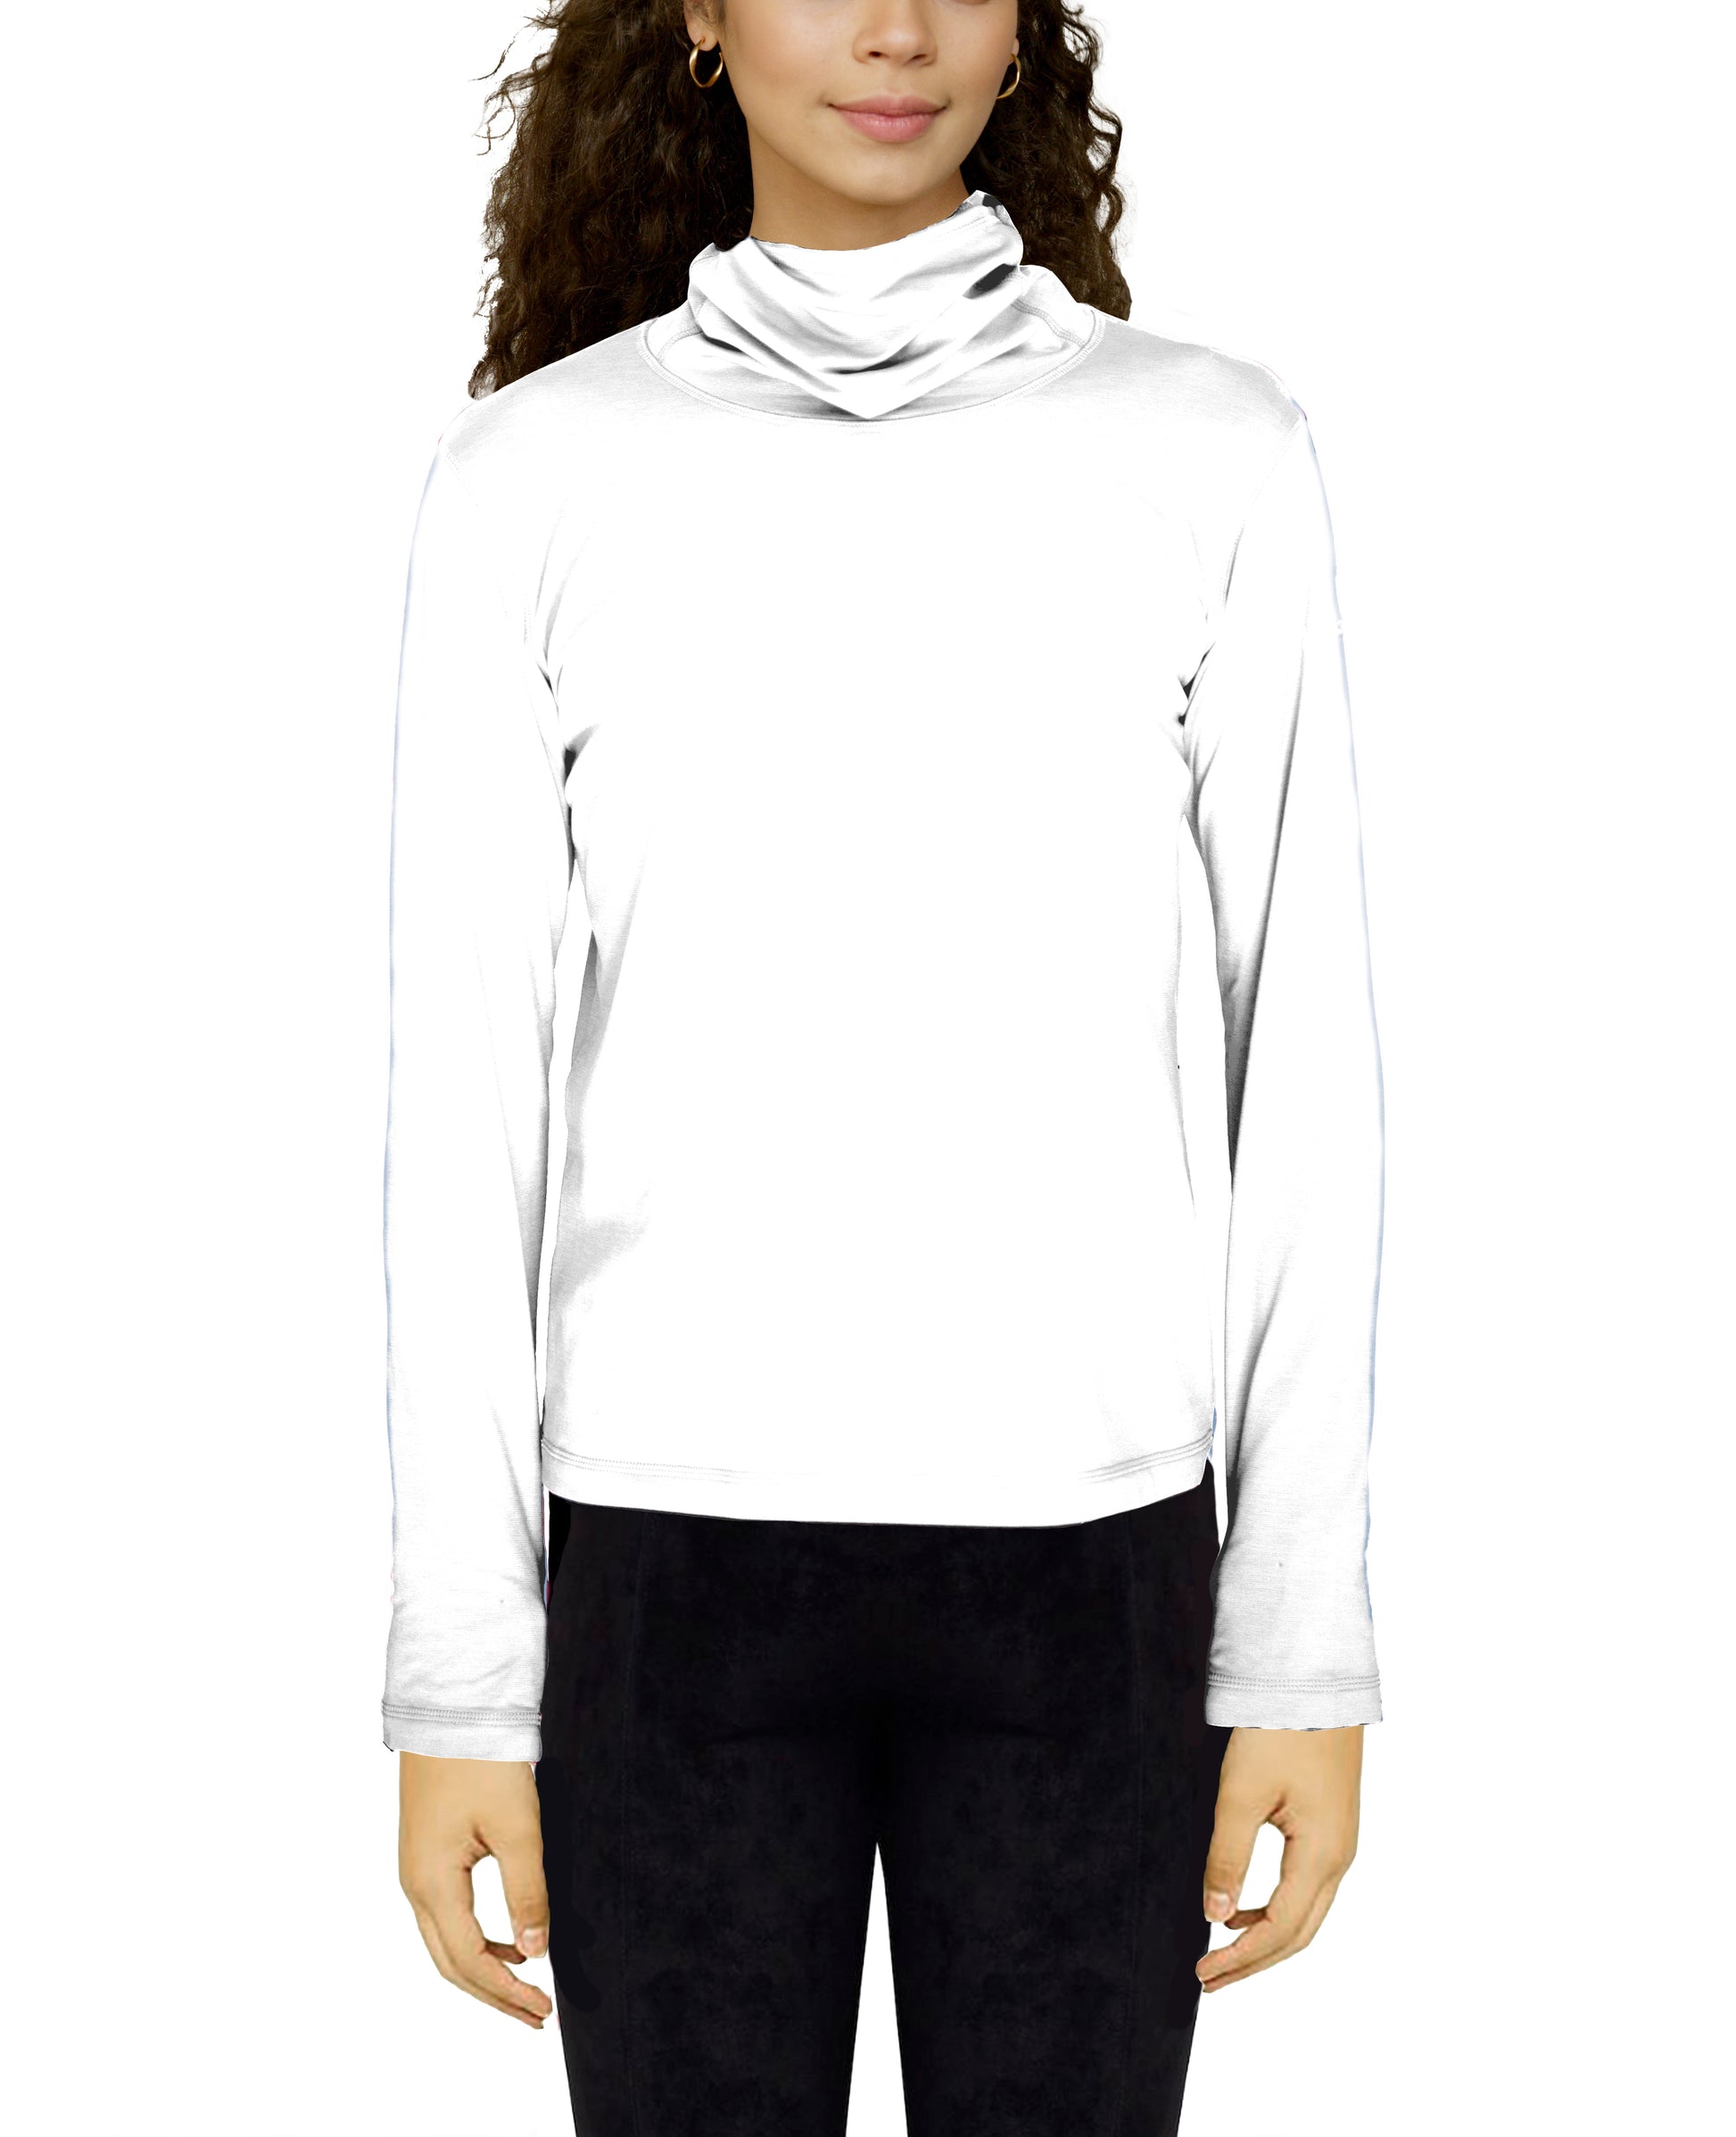 Ushood Liteside Sun Shirt with Ponytail Opening (Adult & Youth) - Hood Design - Ushood